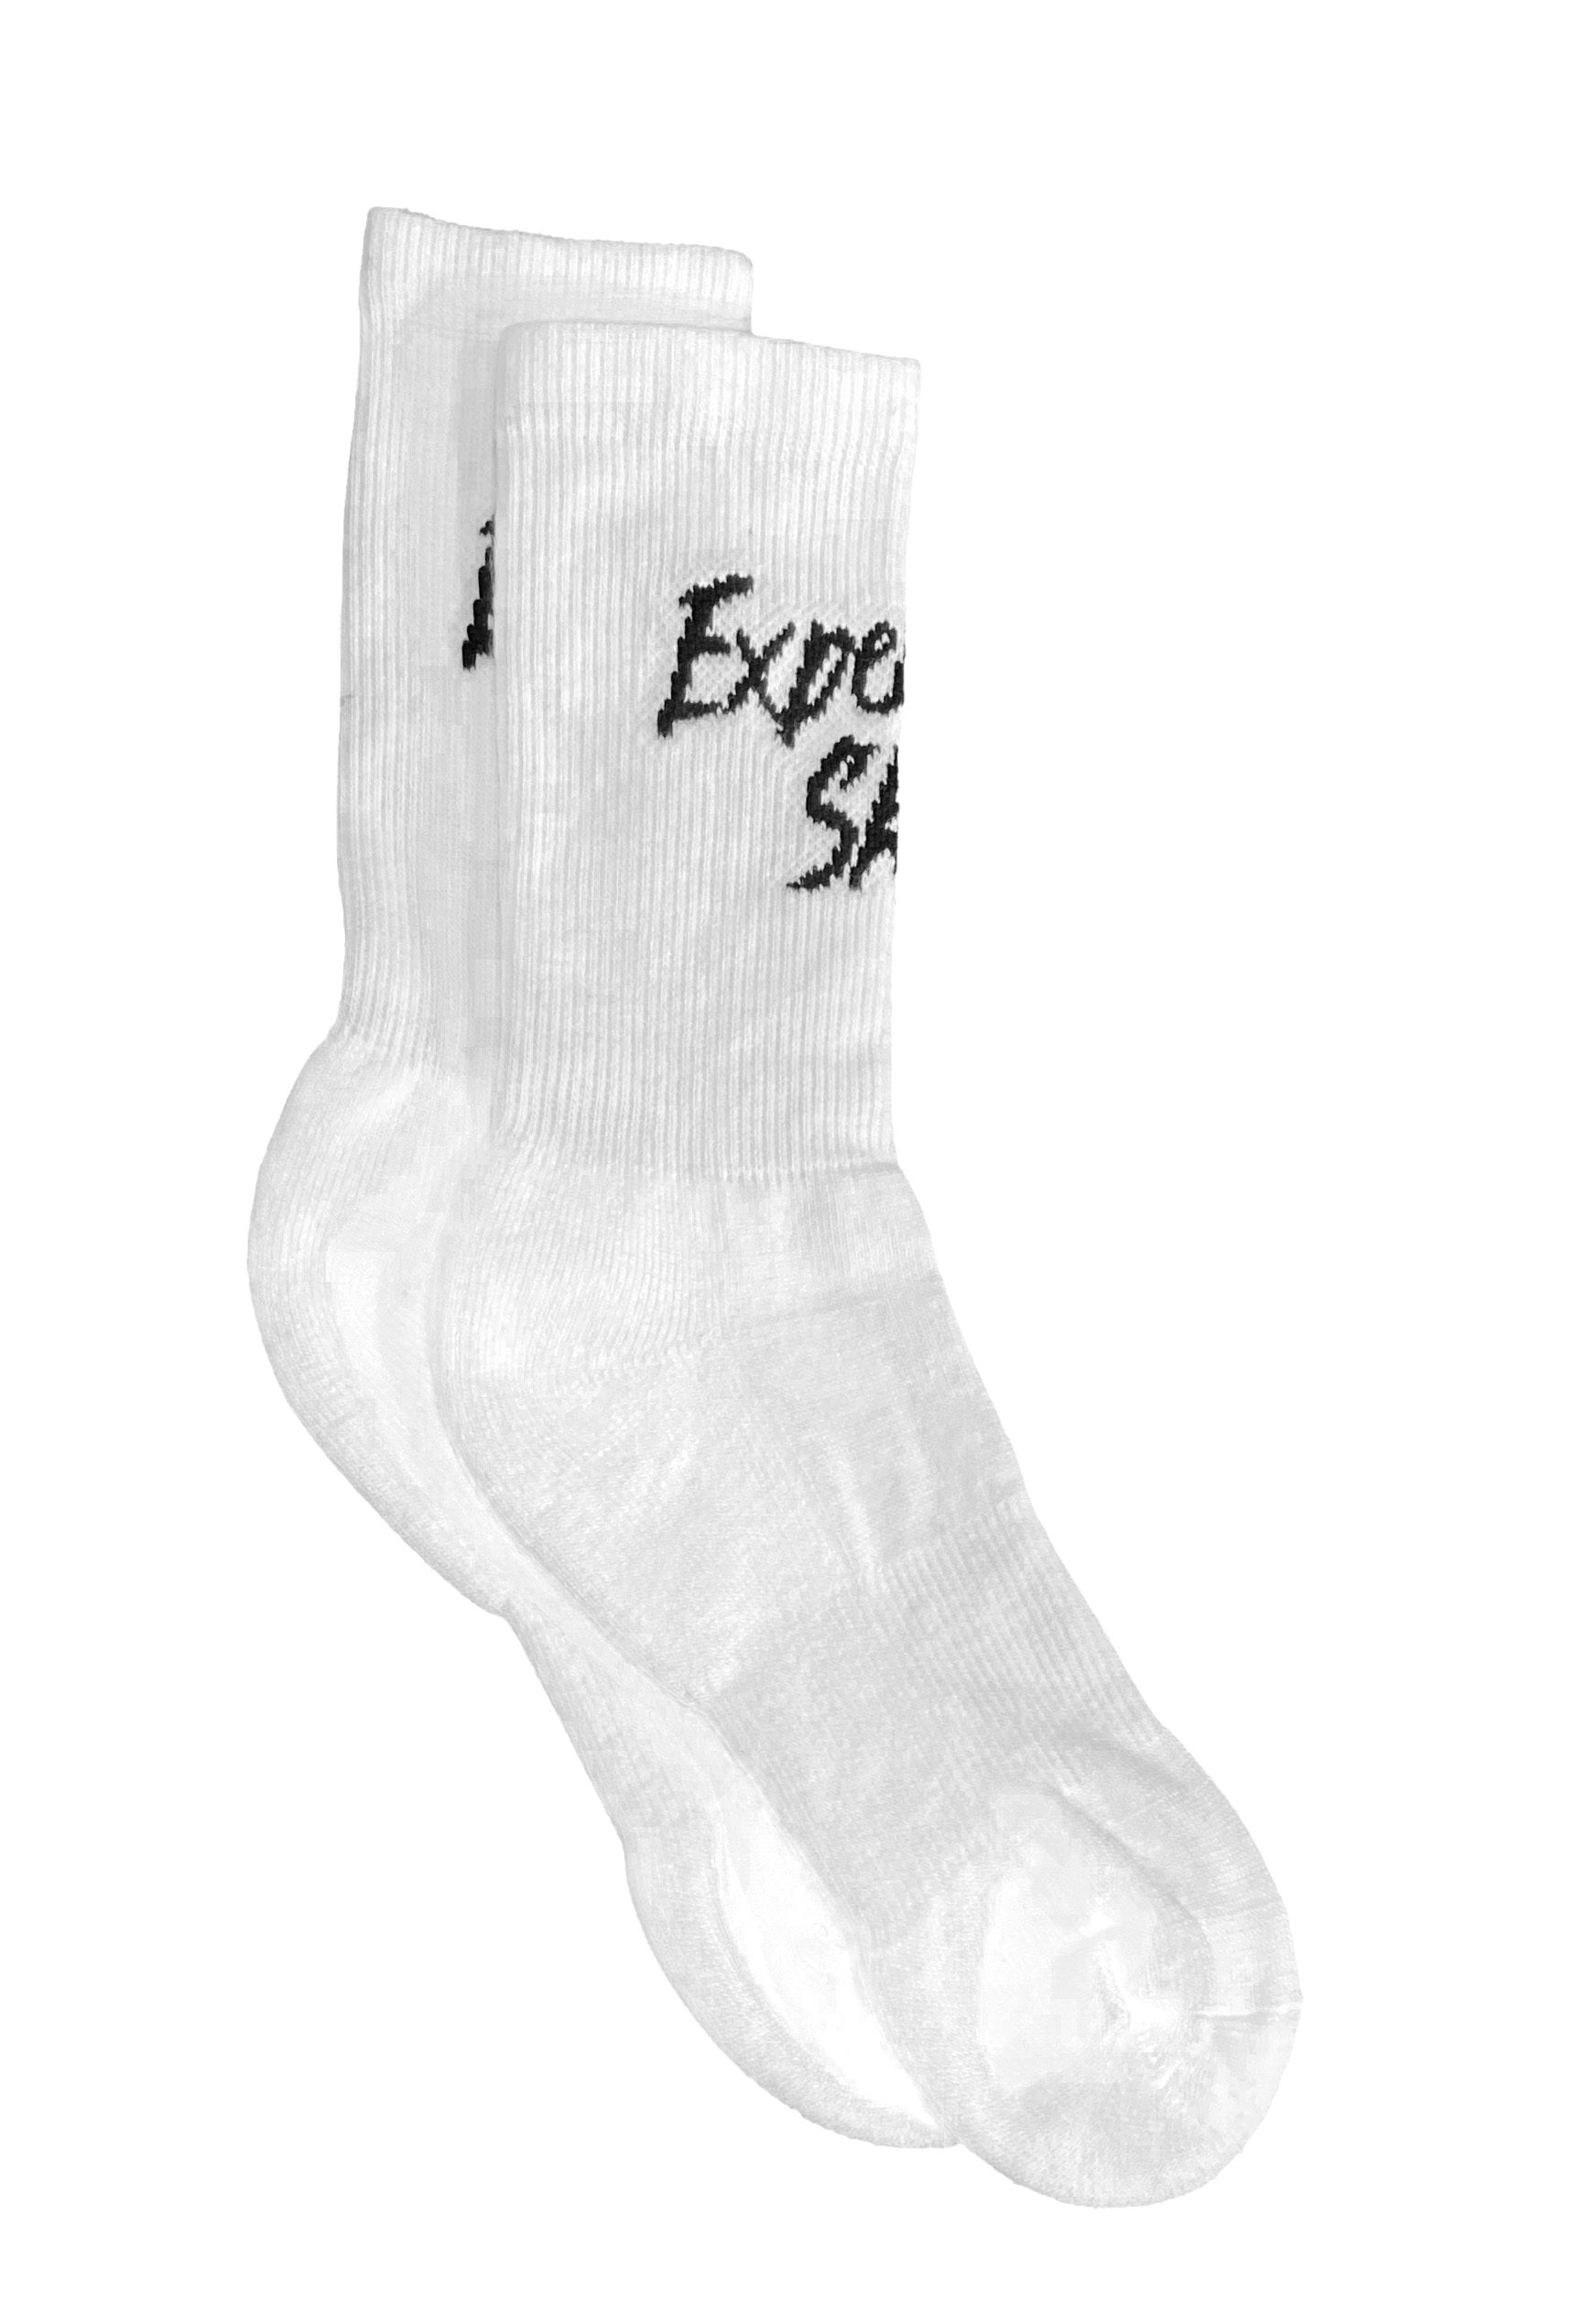 InkAddict Expensive Skin Socks